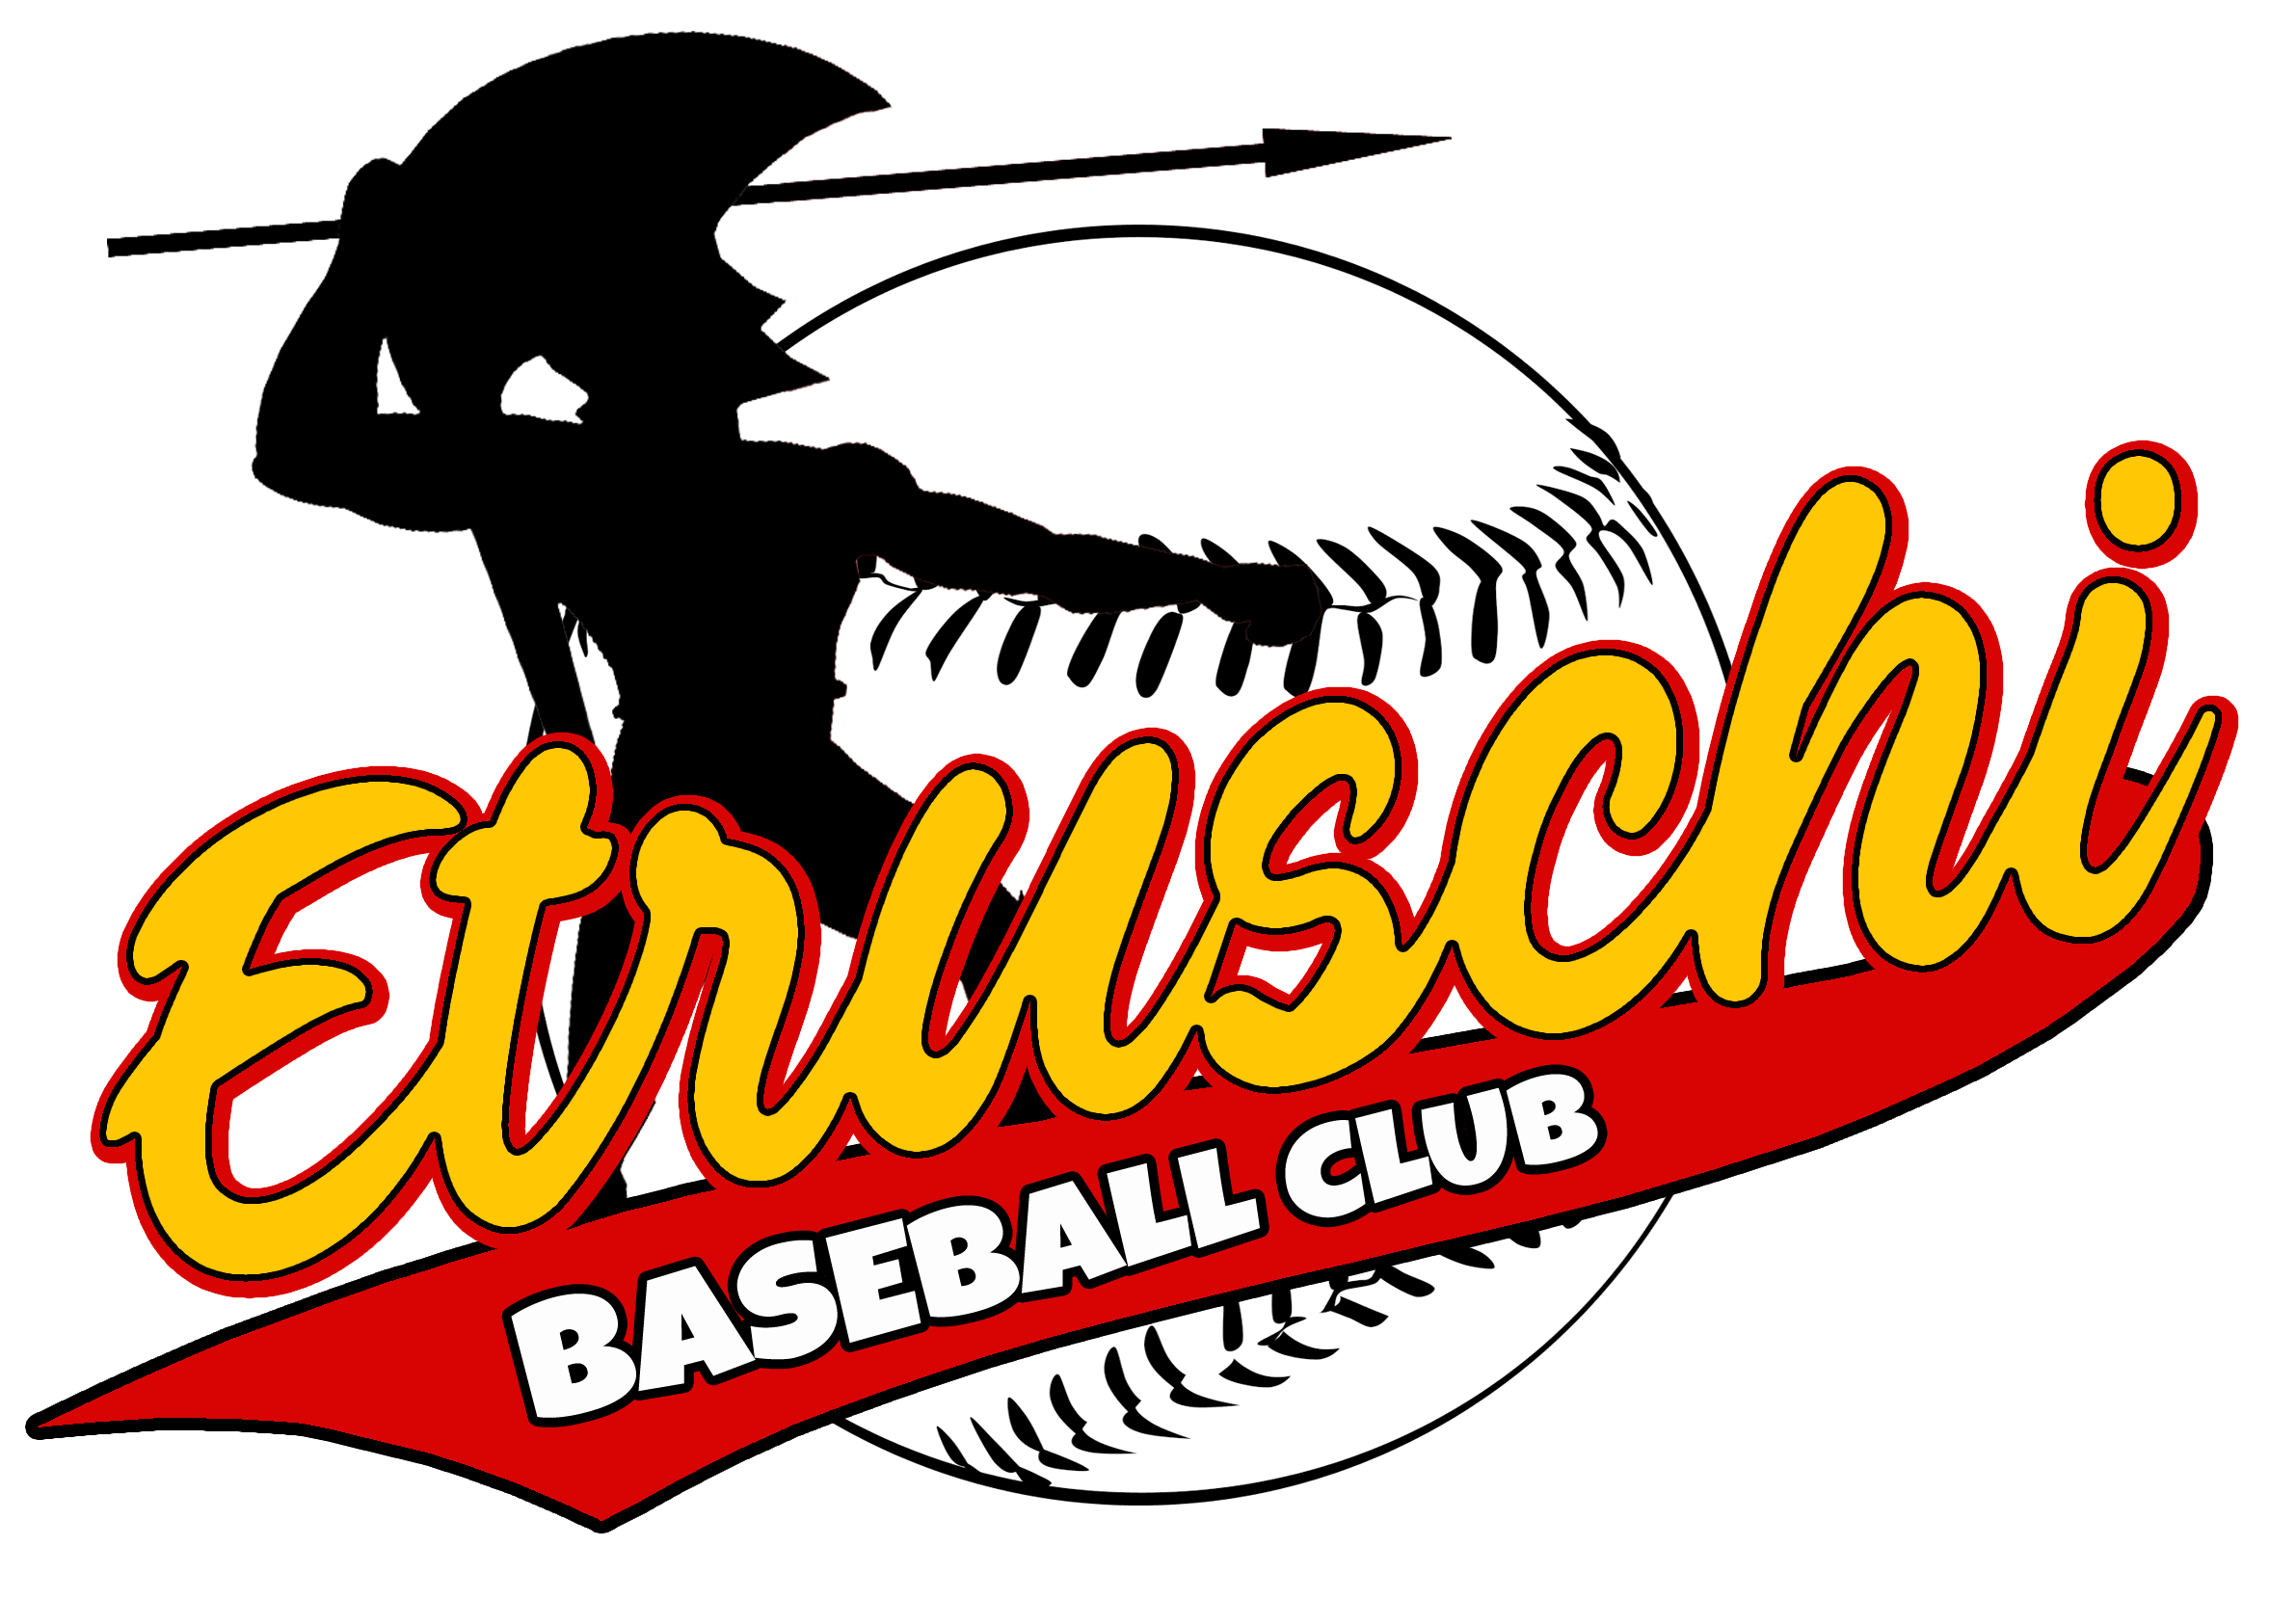 etruschi baseball